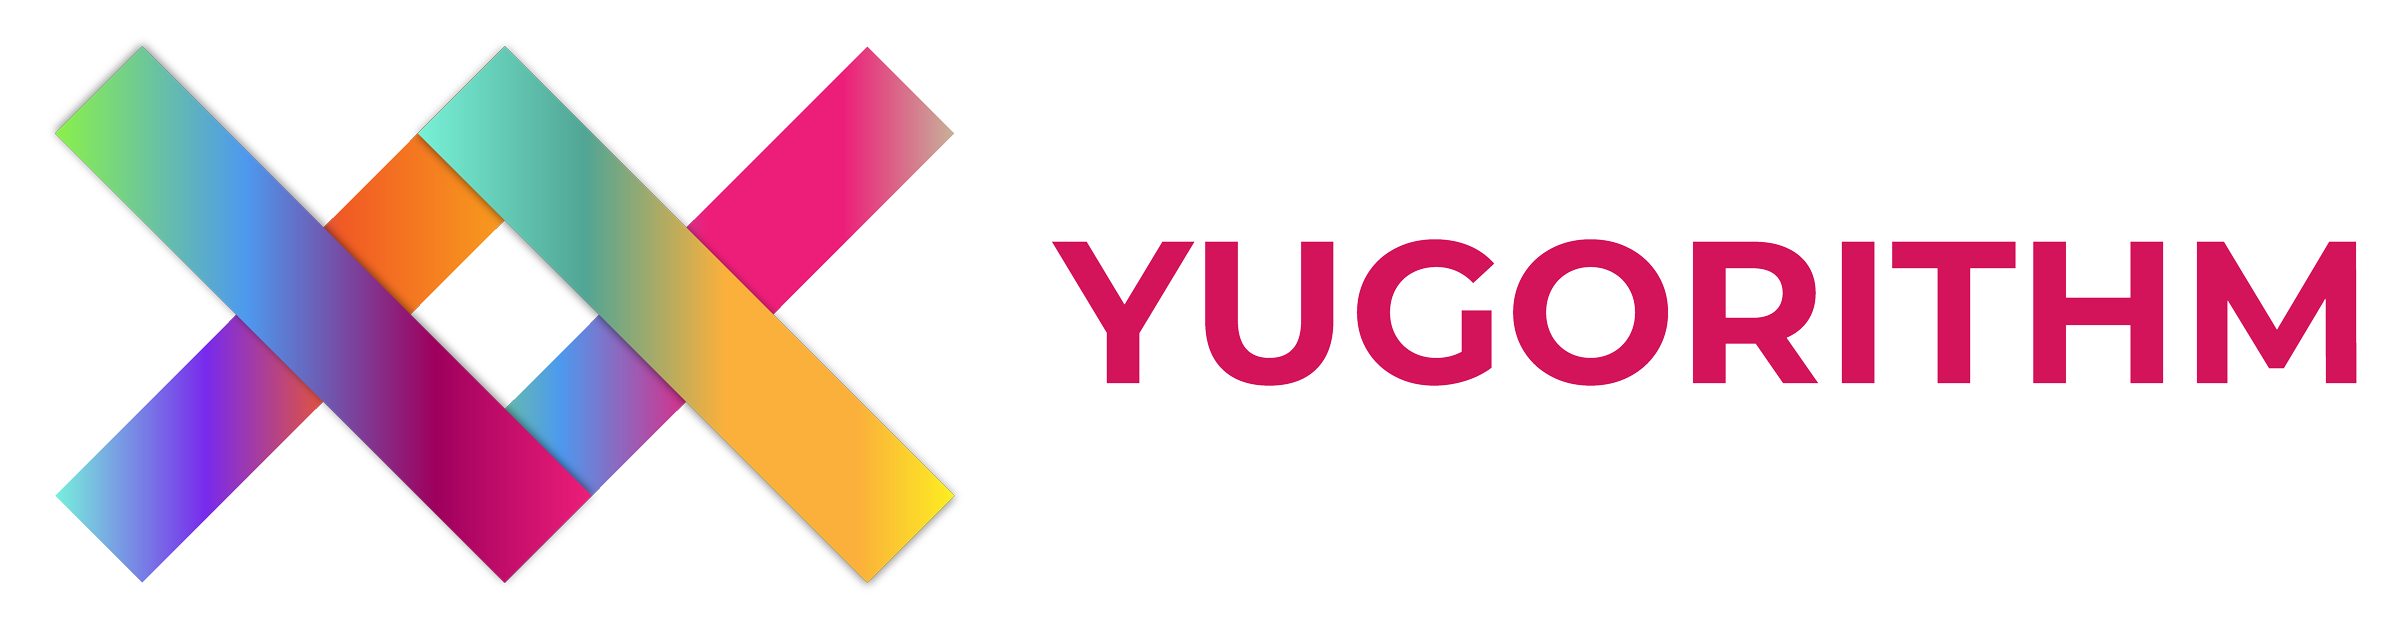 yugo-logo